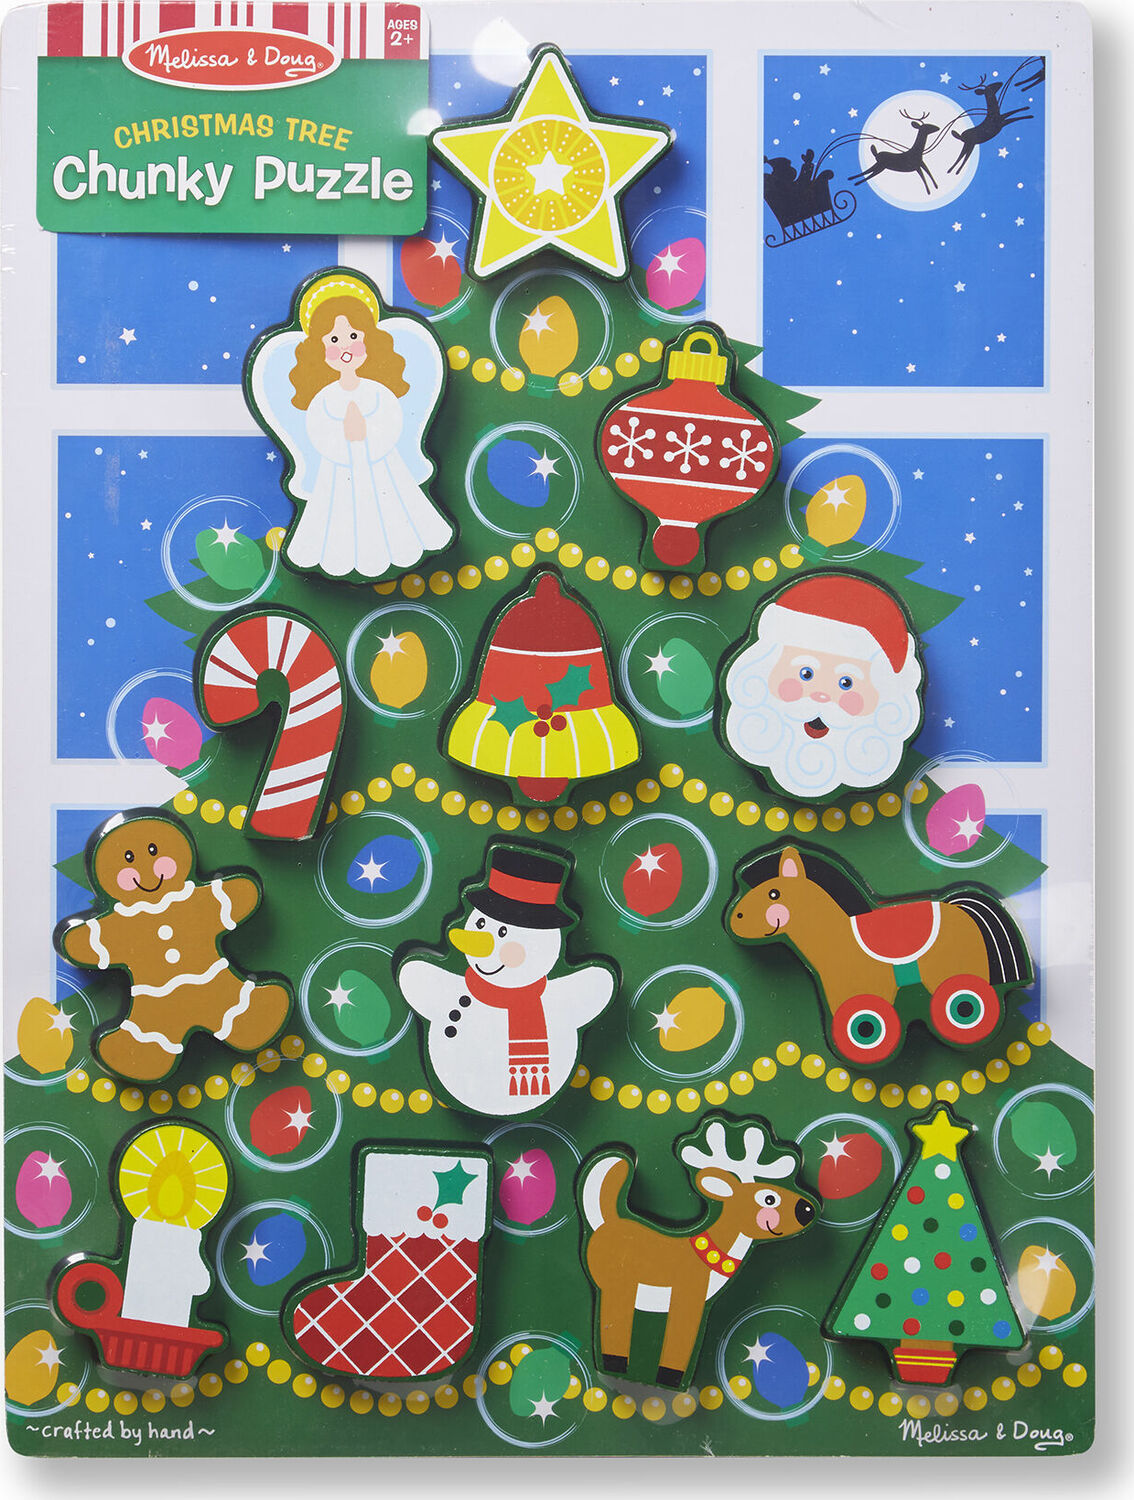 Melissa & Doug MD3718 Christmas Tree Chunky Puzzle 